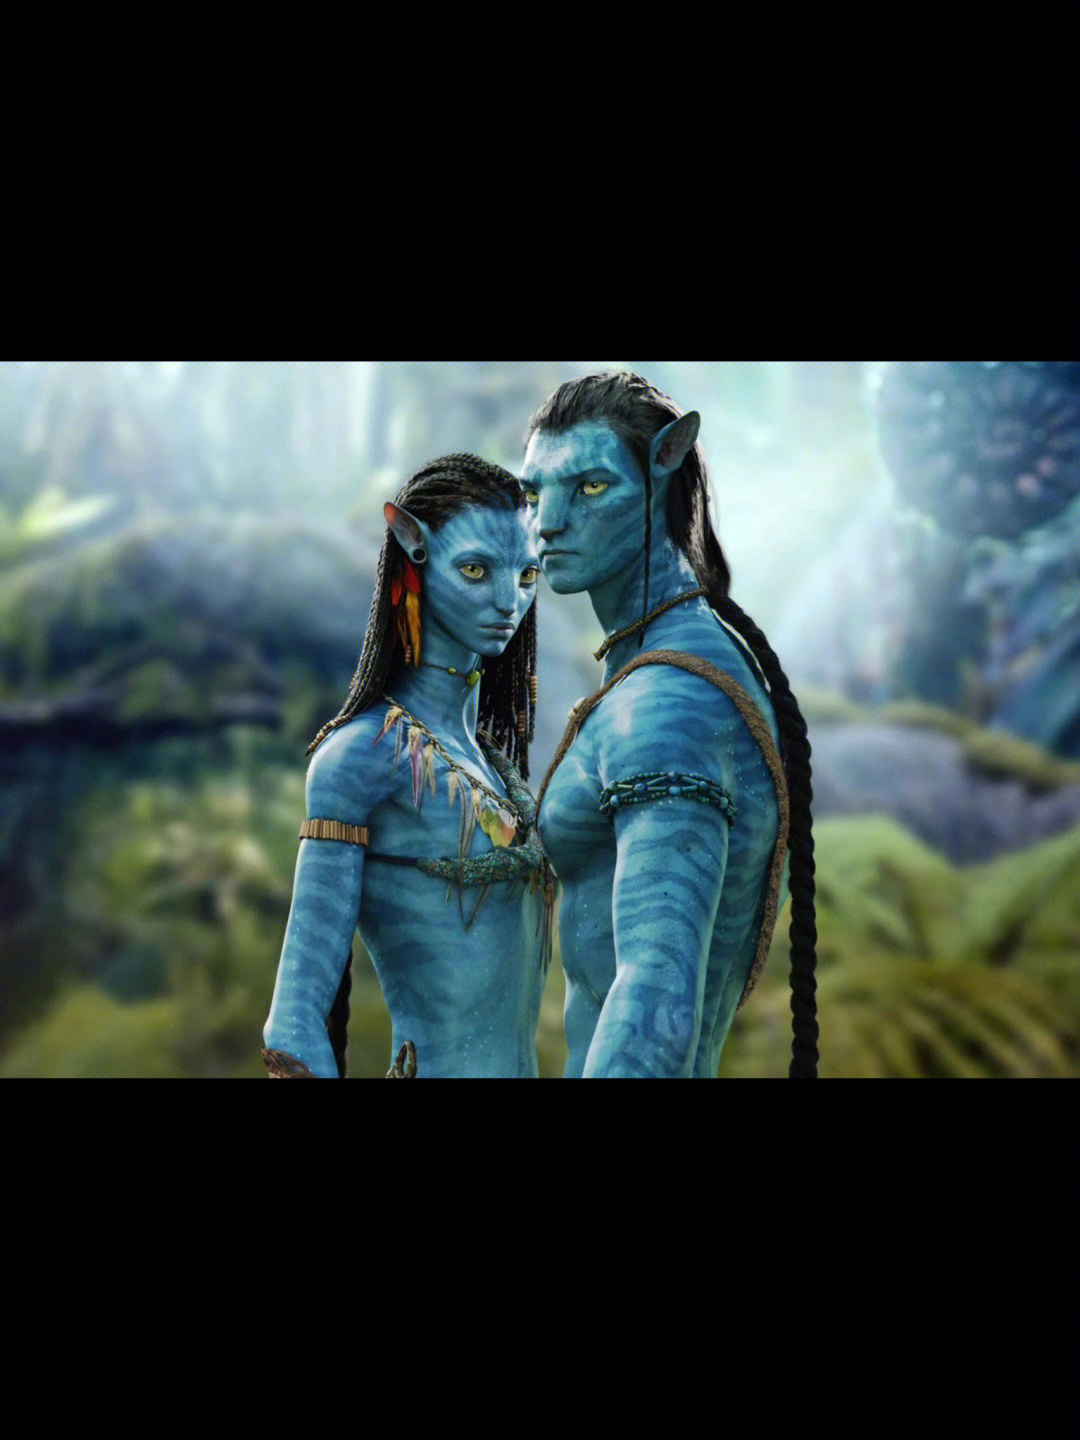 Avatar movie Chinese download_Movie Avatar download Baidu Netdisk_Movie Avatar download